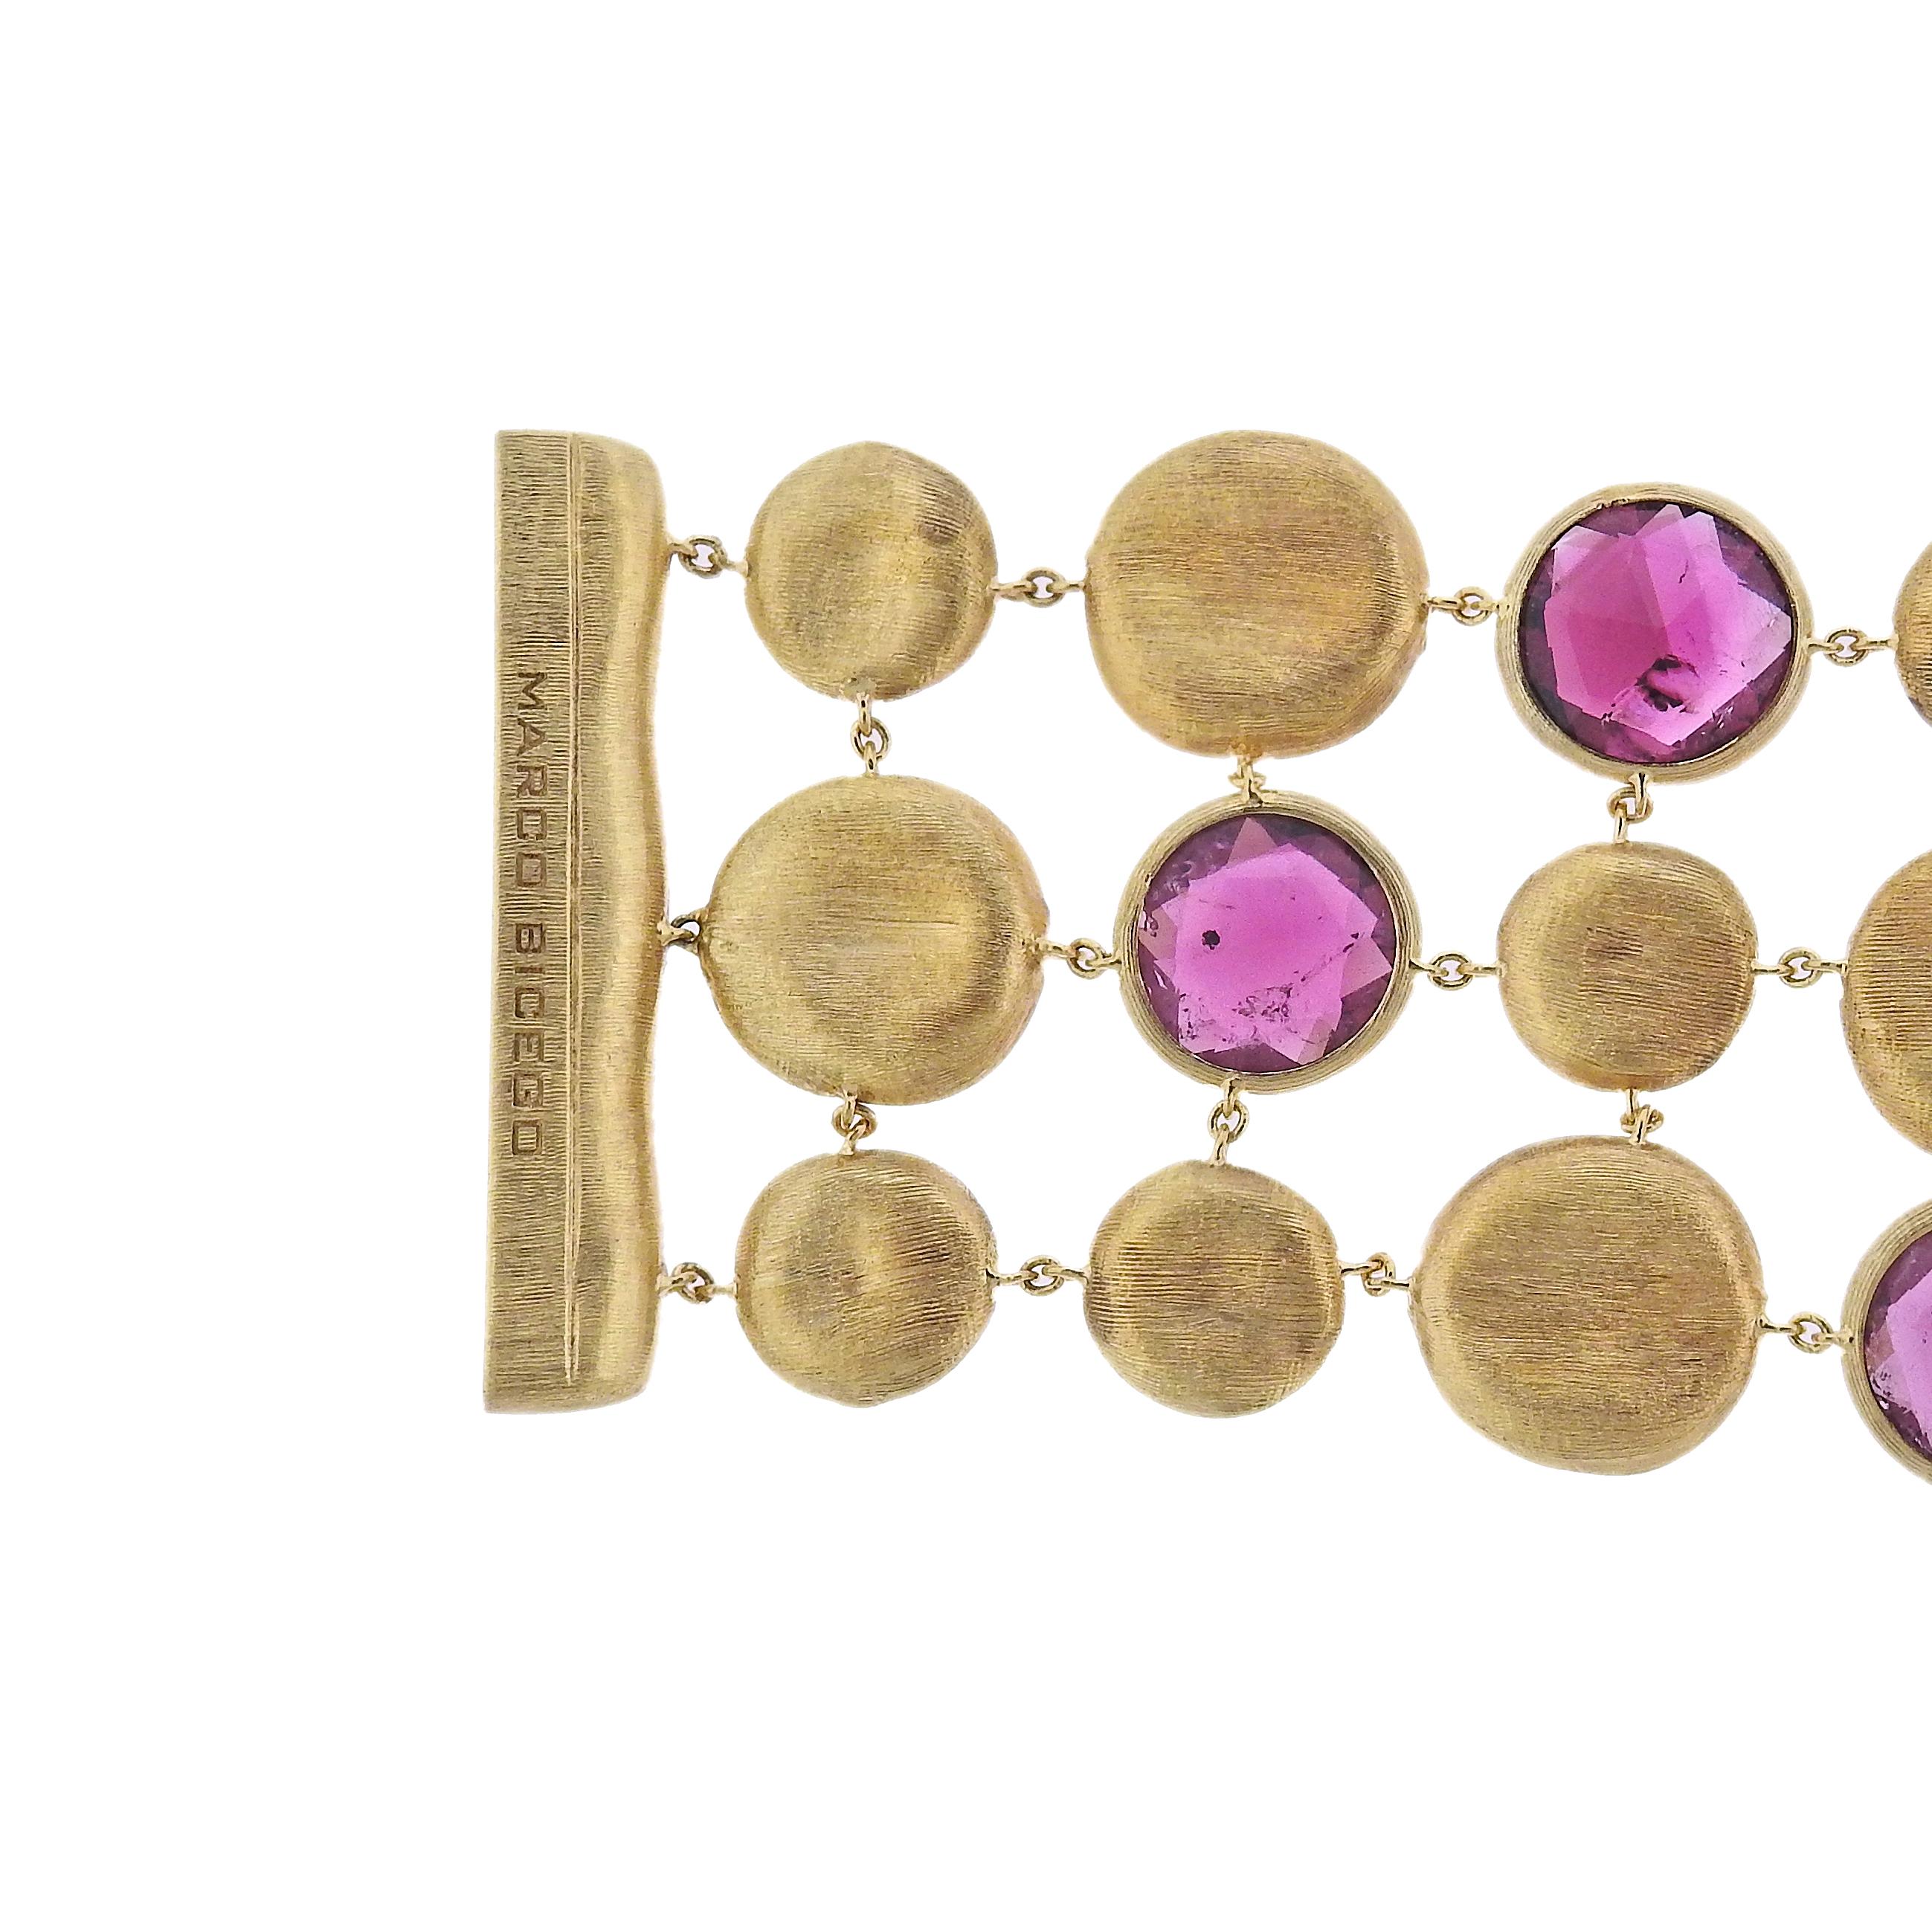 Marco Bicego Jaipur collection 18K yellow gold multi strand link bracelet set with spessartite garnets. Bracelet is 7